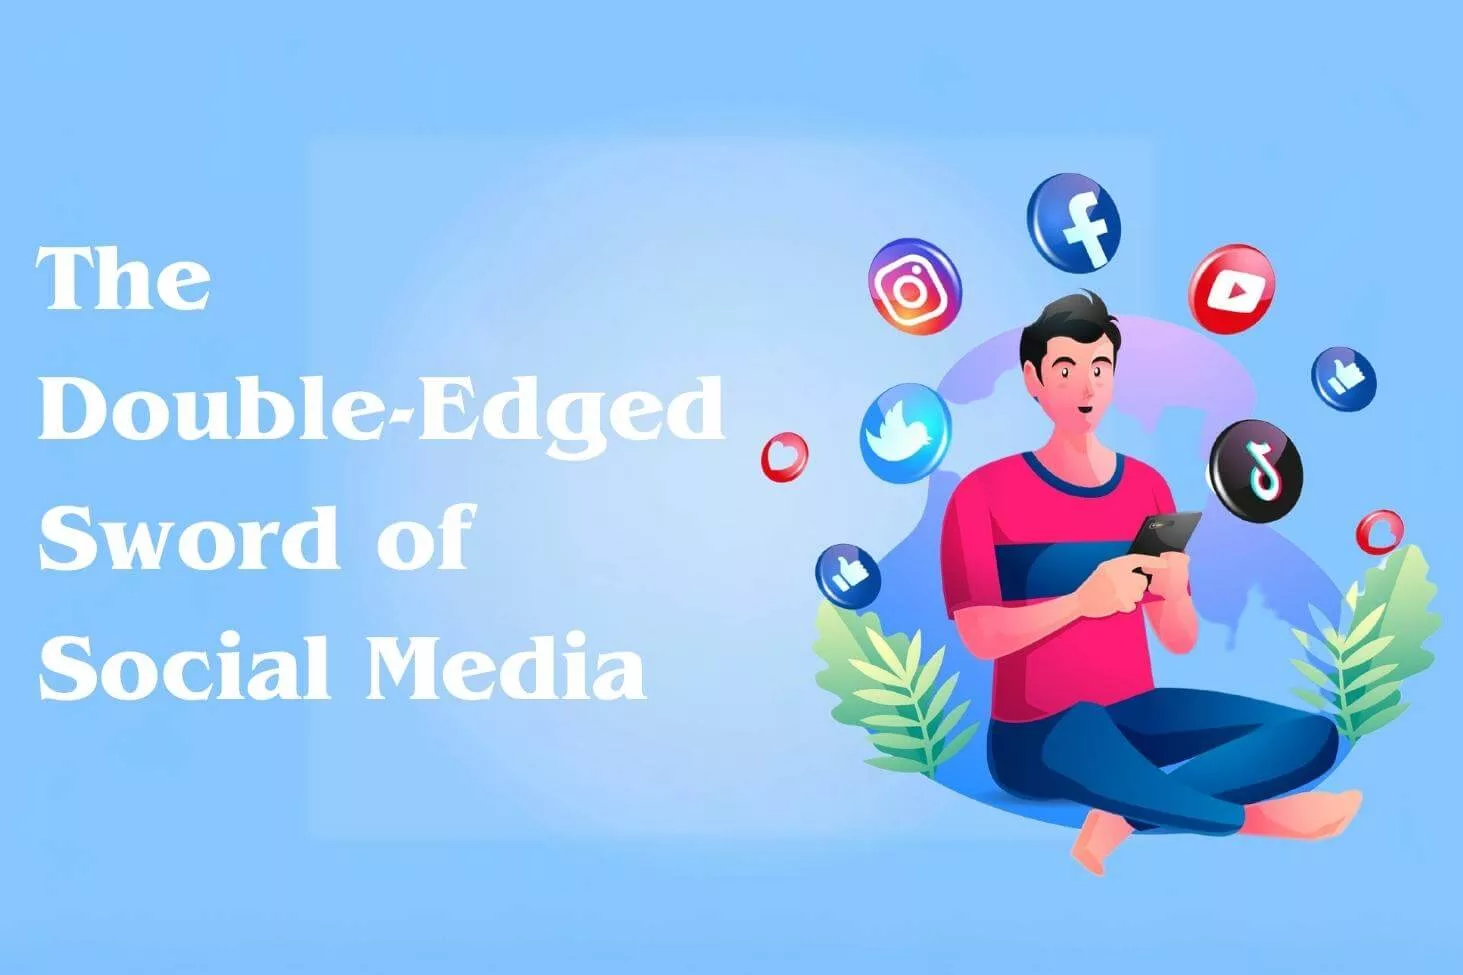 The Double-Edged Sword of Social Media